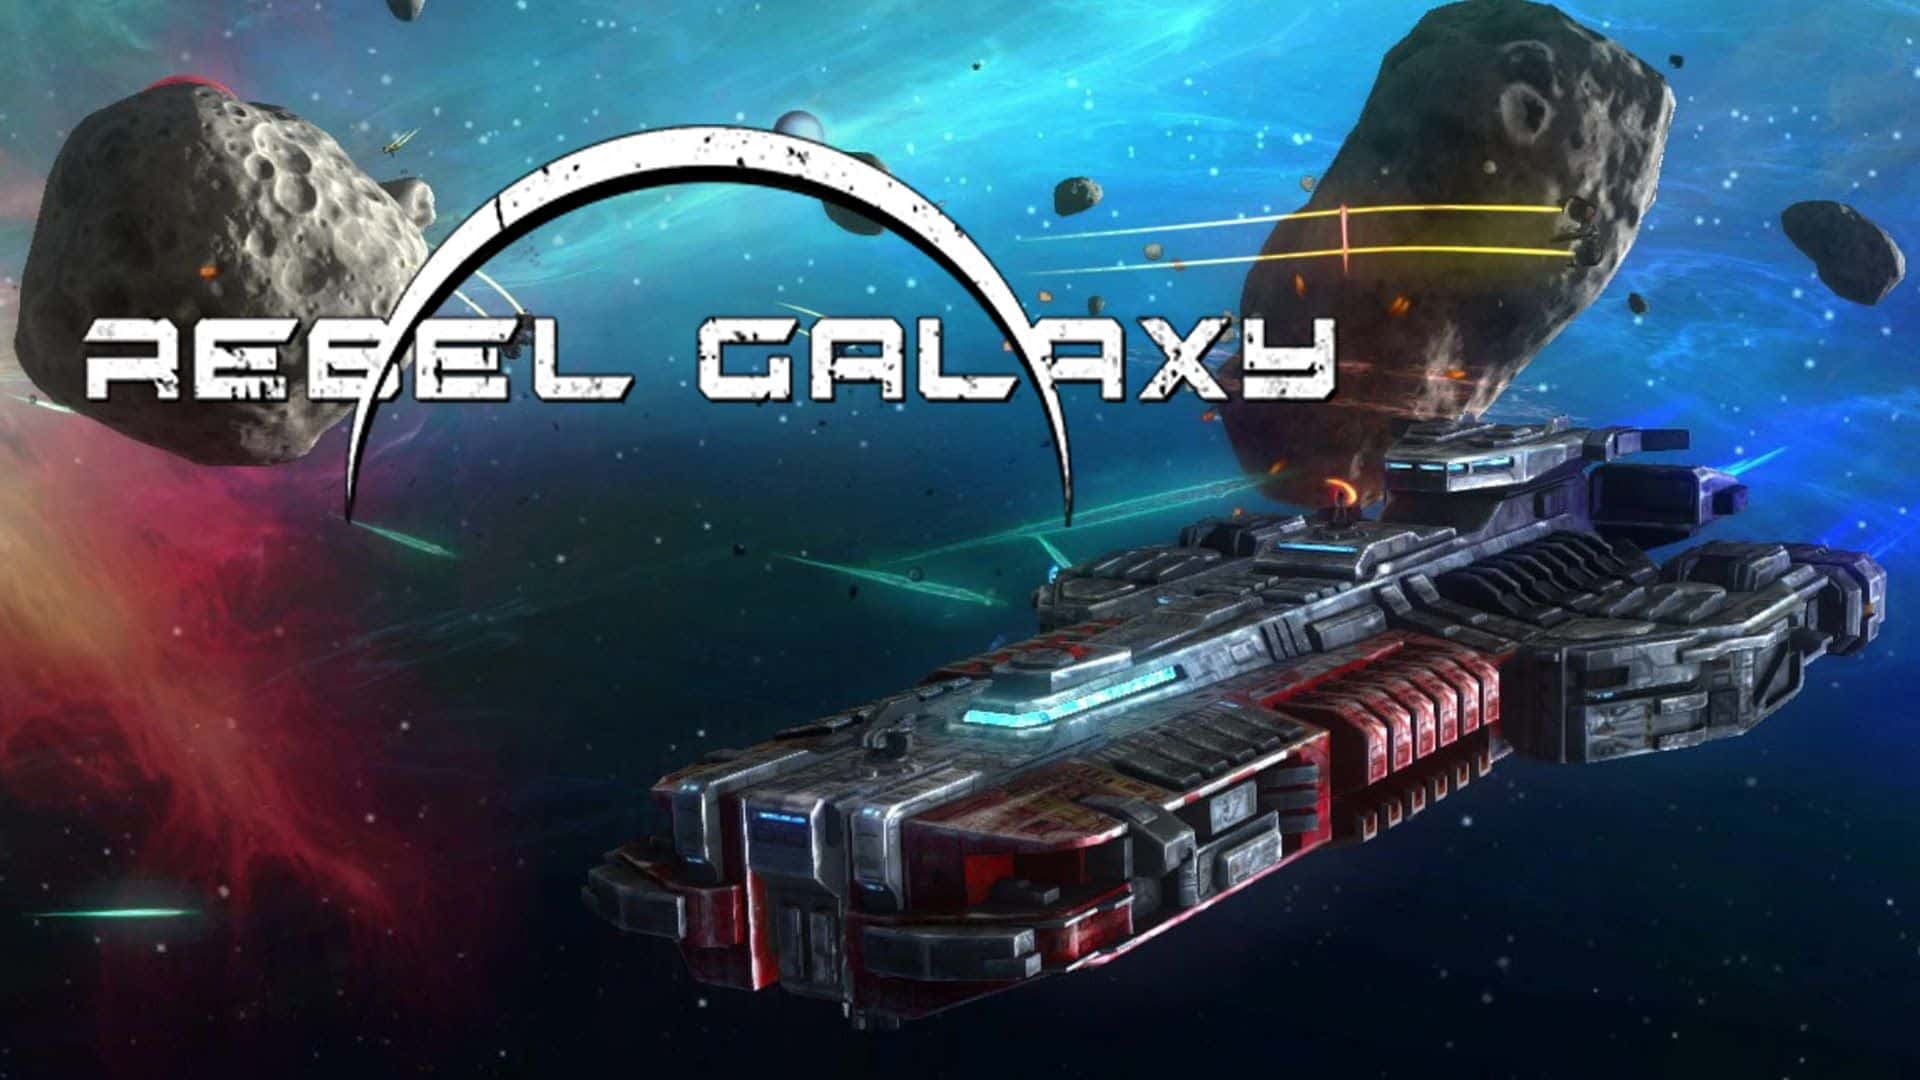 Халява: в EGS бесплатно раздают космический симулятор Rebel Galaxy